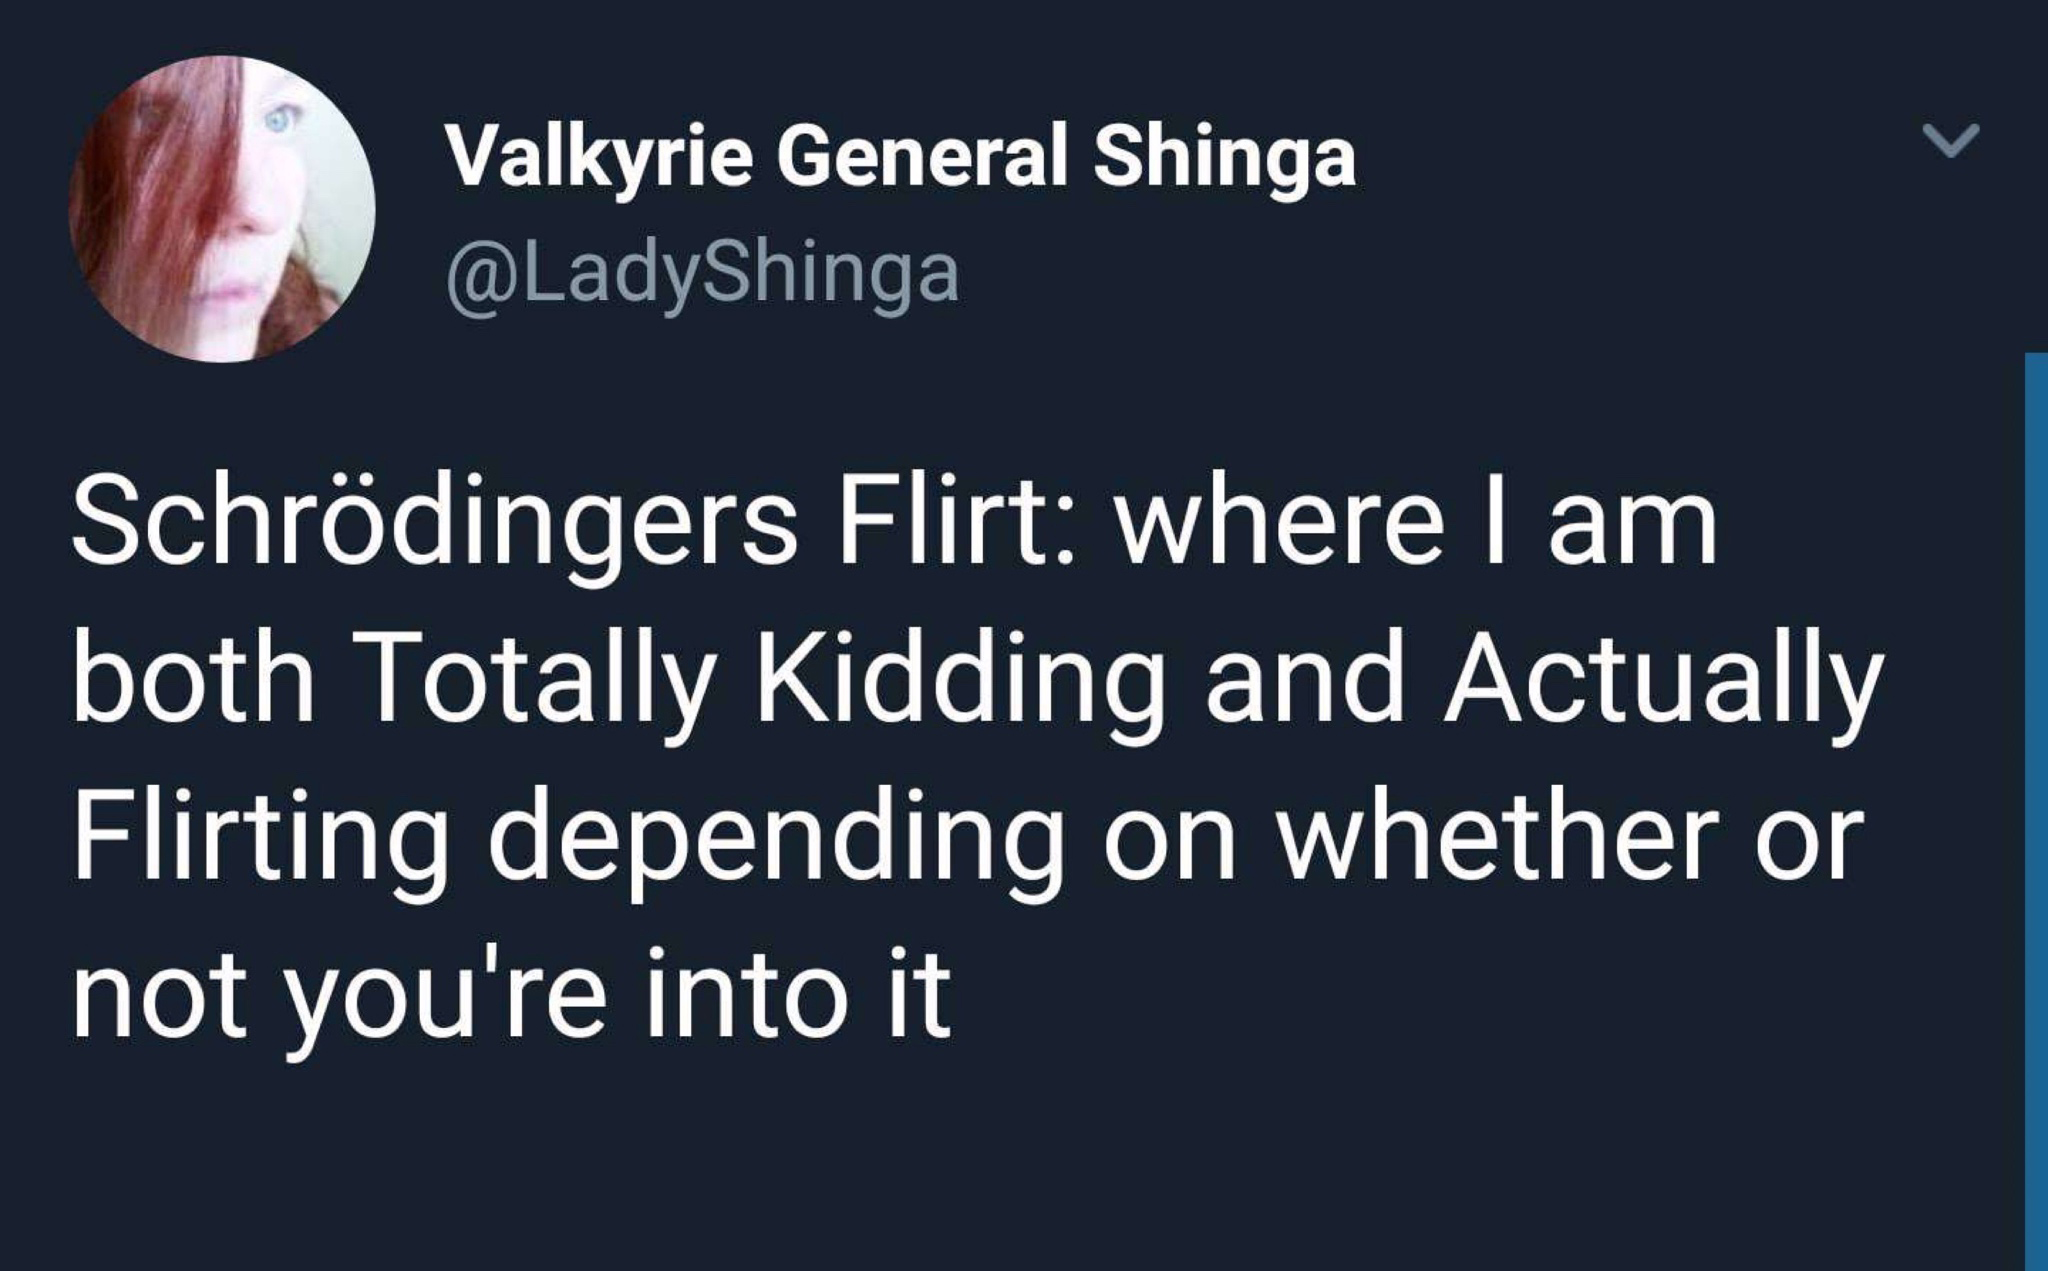 schrodinger's flirt meme - W Valkyrie General Shinga Schrdingers Flirt where I am both Totally Kidding and Actually Flirting depending on whether or not you're into it